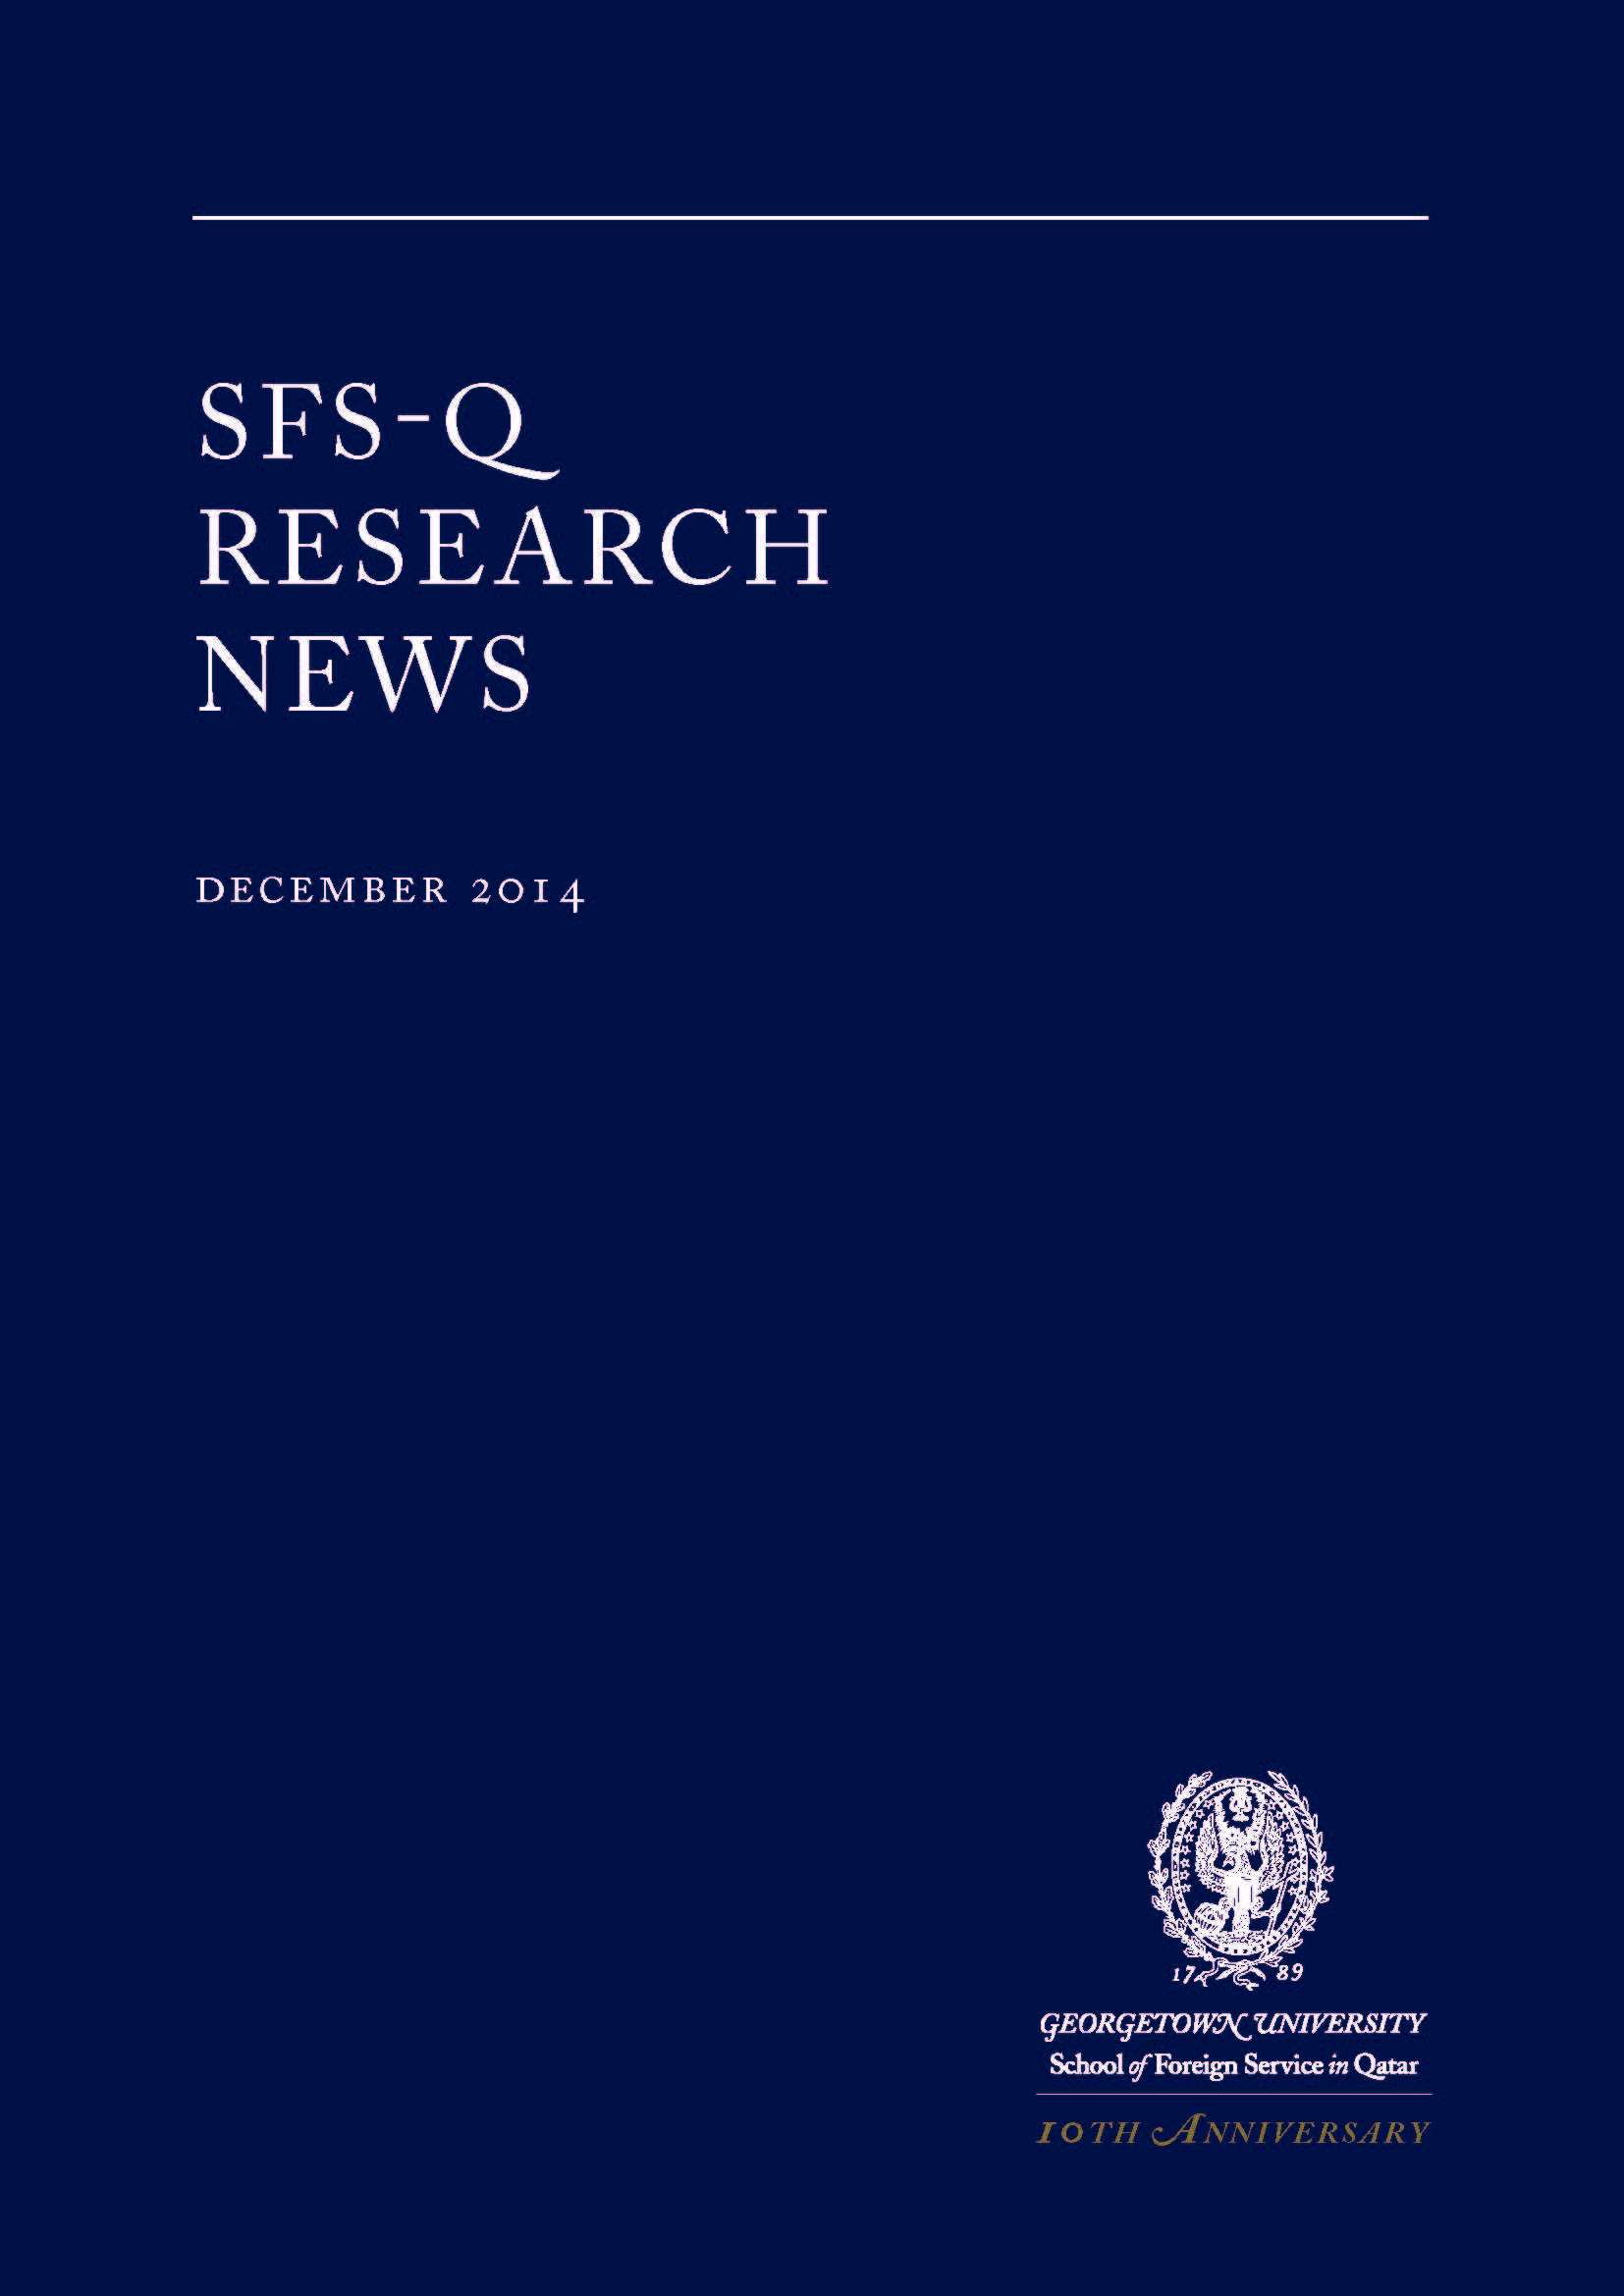 Research News Dec 2014